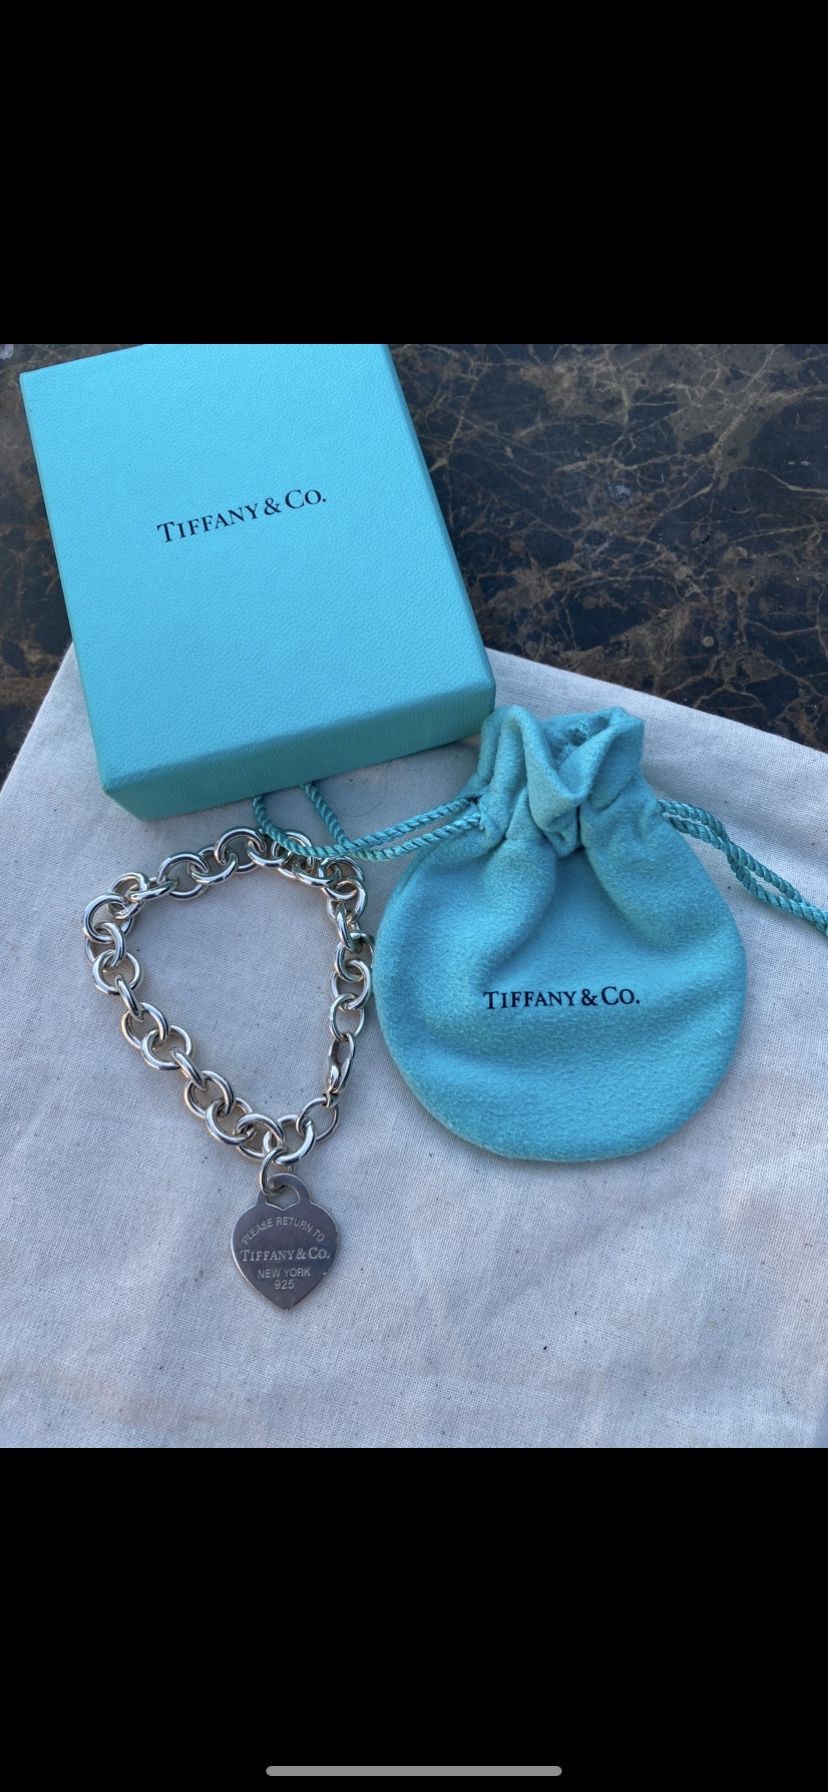 tiffany & co bracelet